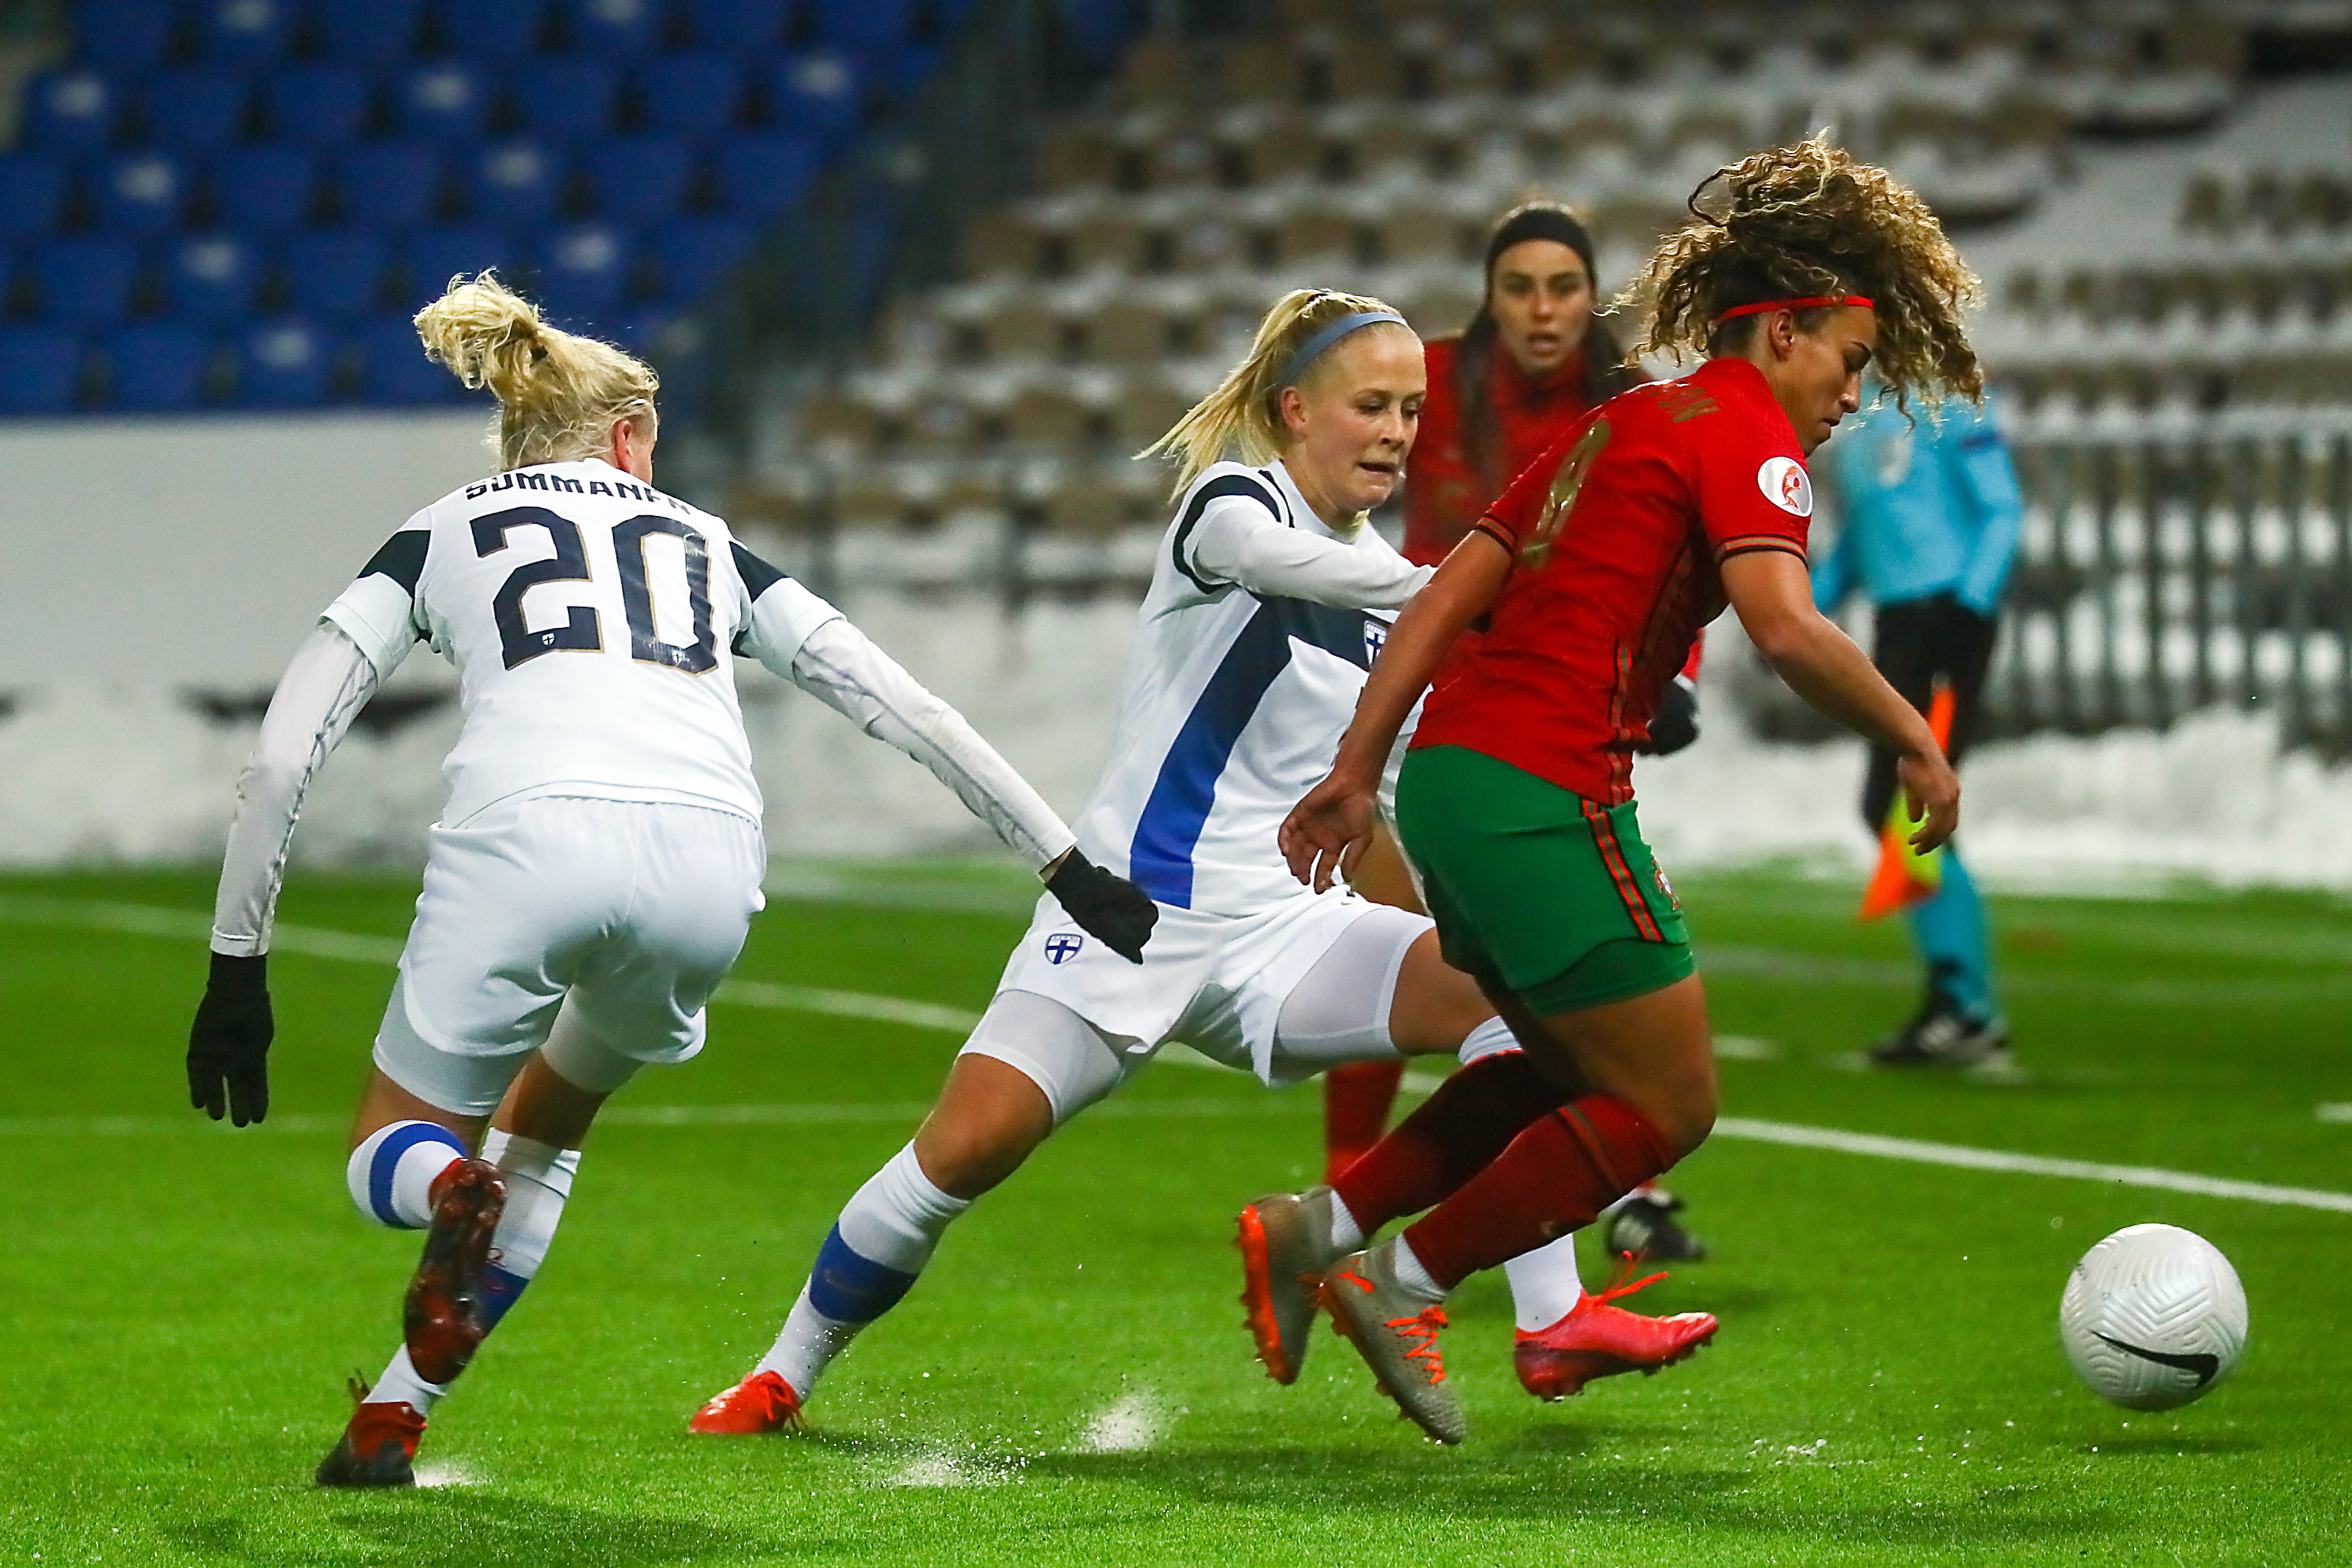 Portugal vence e cola-se à Finlândia na corrida ao Euro 2021 feminino